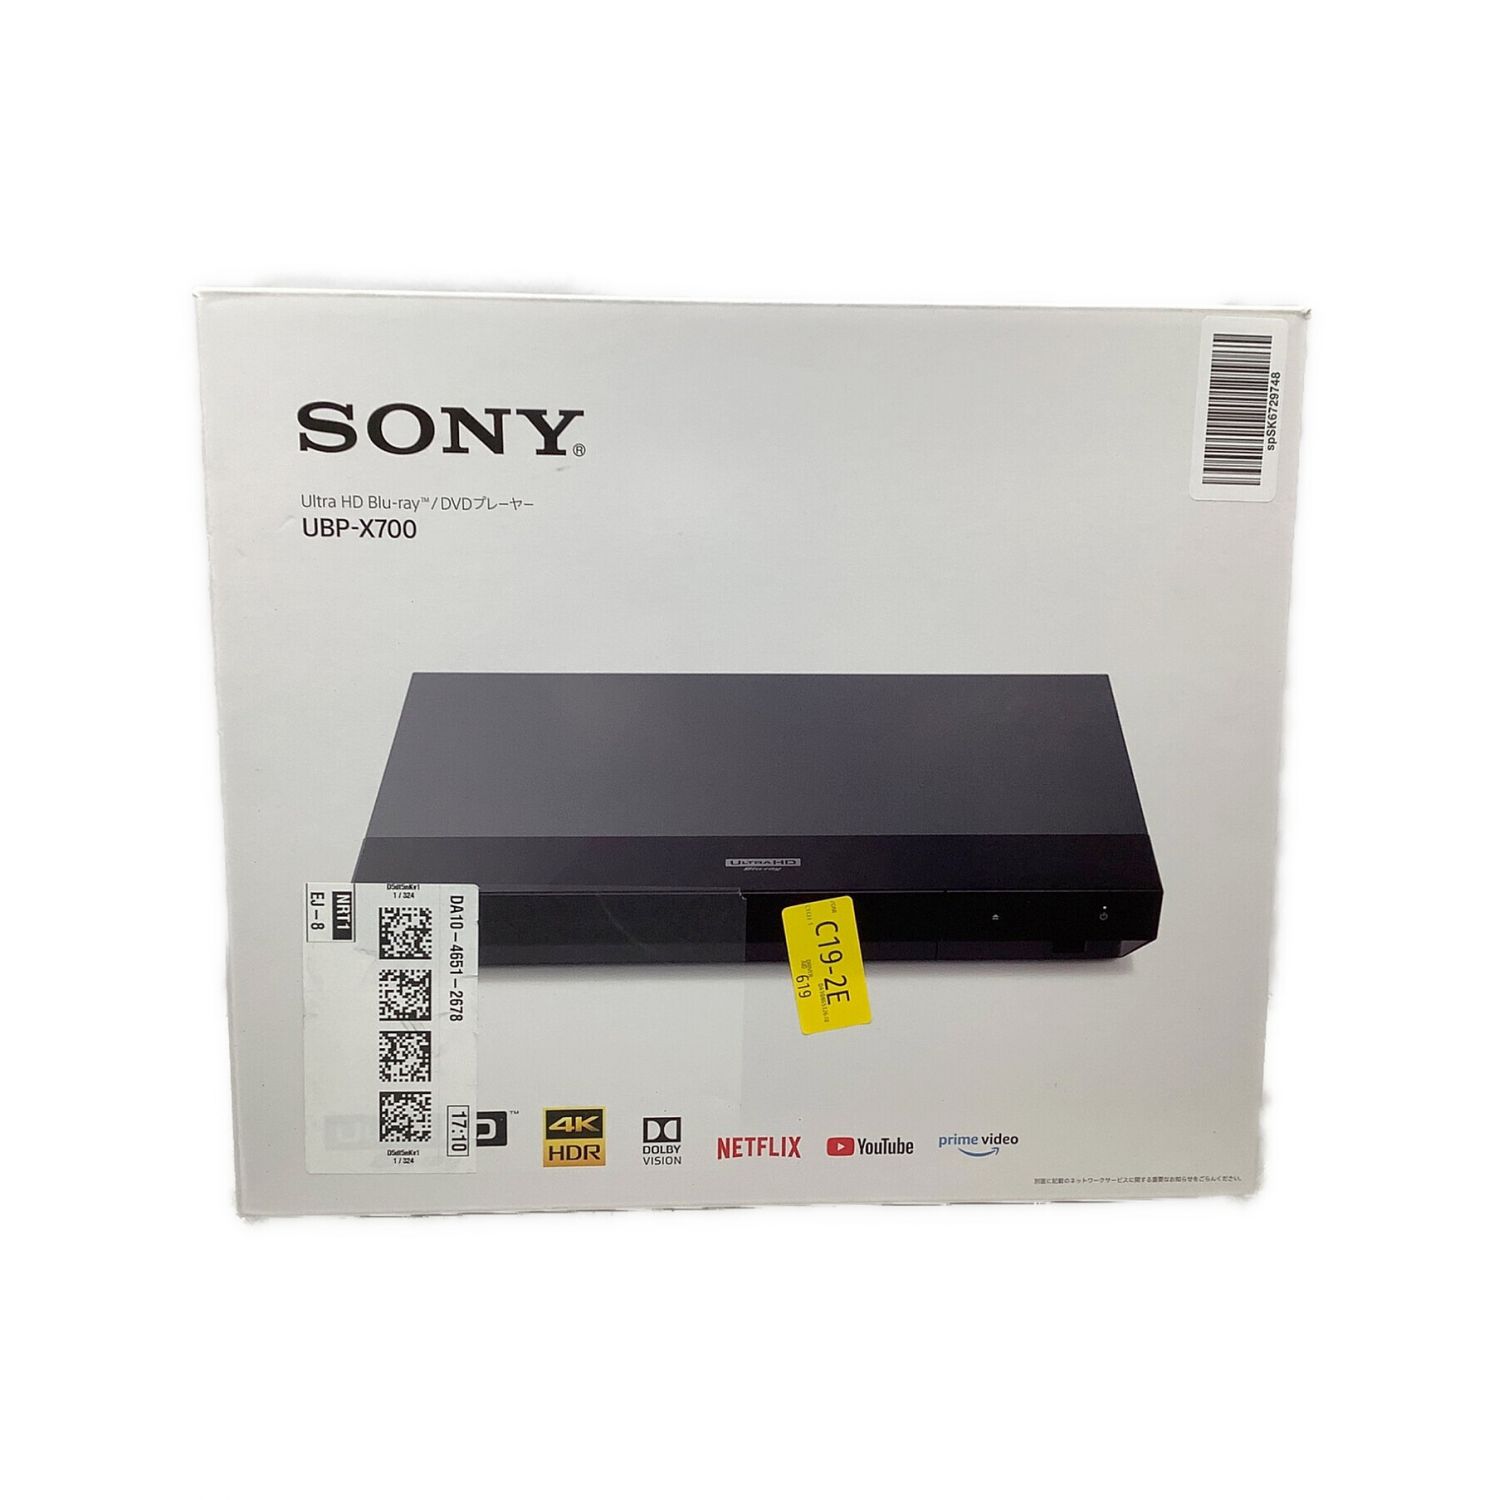 SONY (ソニー) DVDプレーヤー UBP-X700 SPSK6729748｜トレファクONLINE